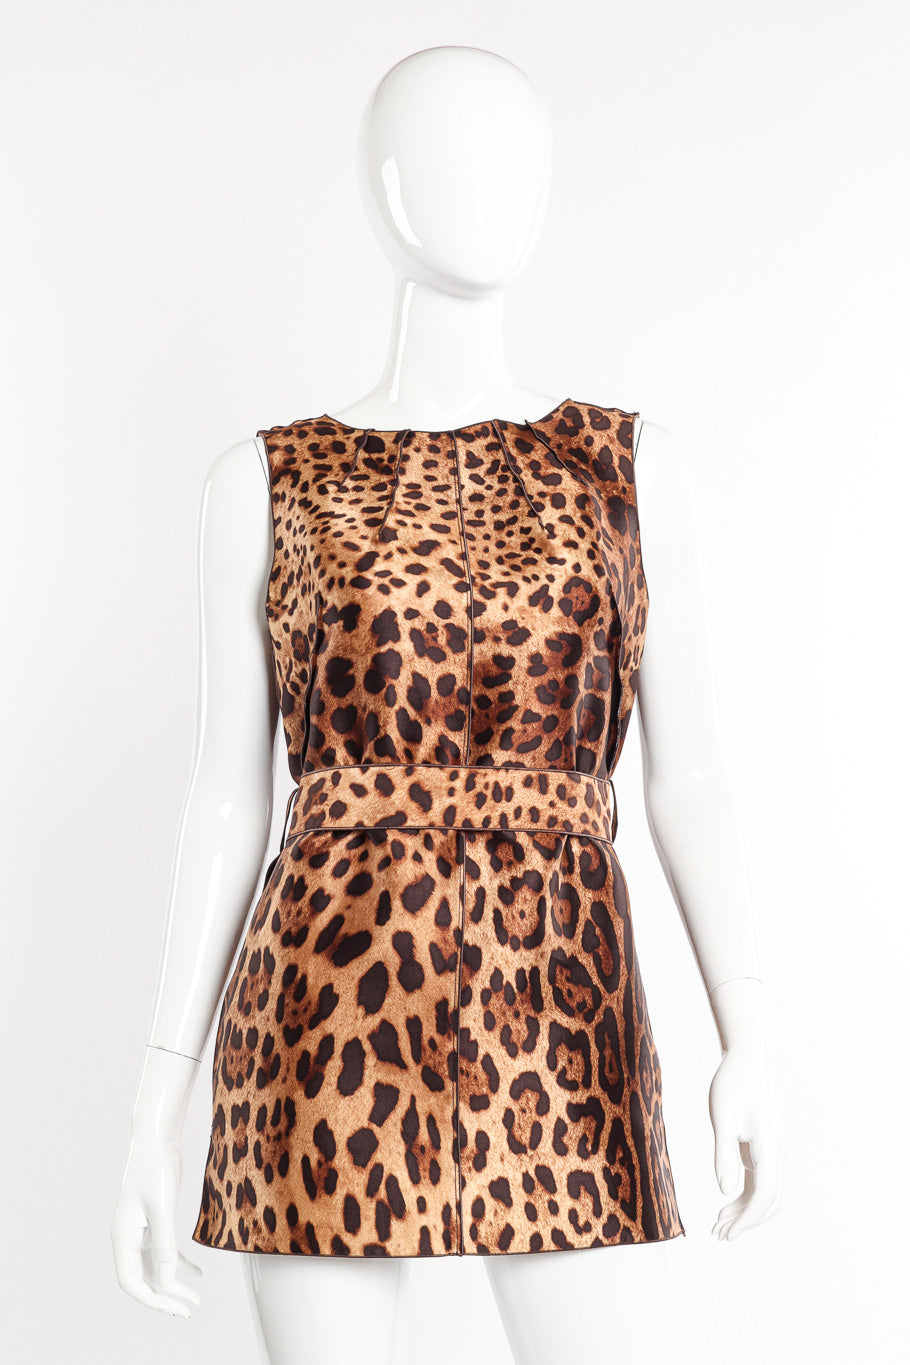 Dolce & Gabbana Belted Leopard Mini Dress front view @recessla